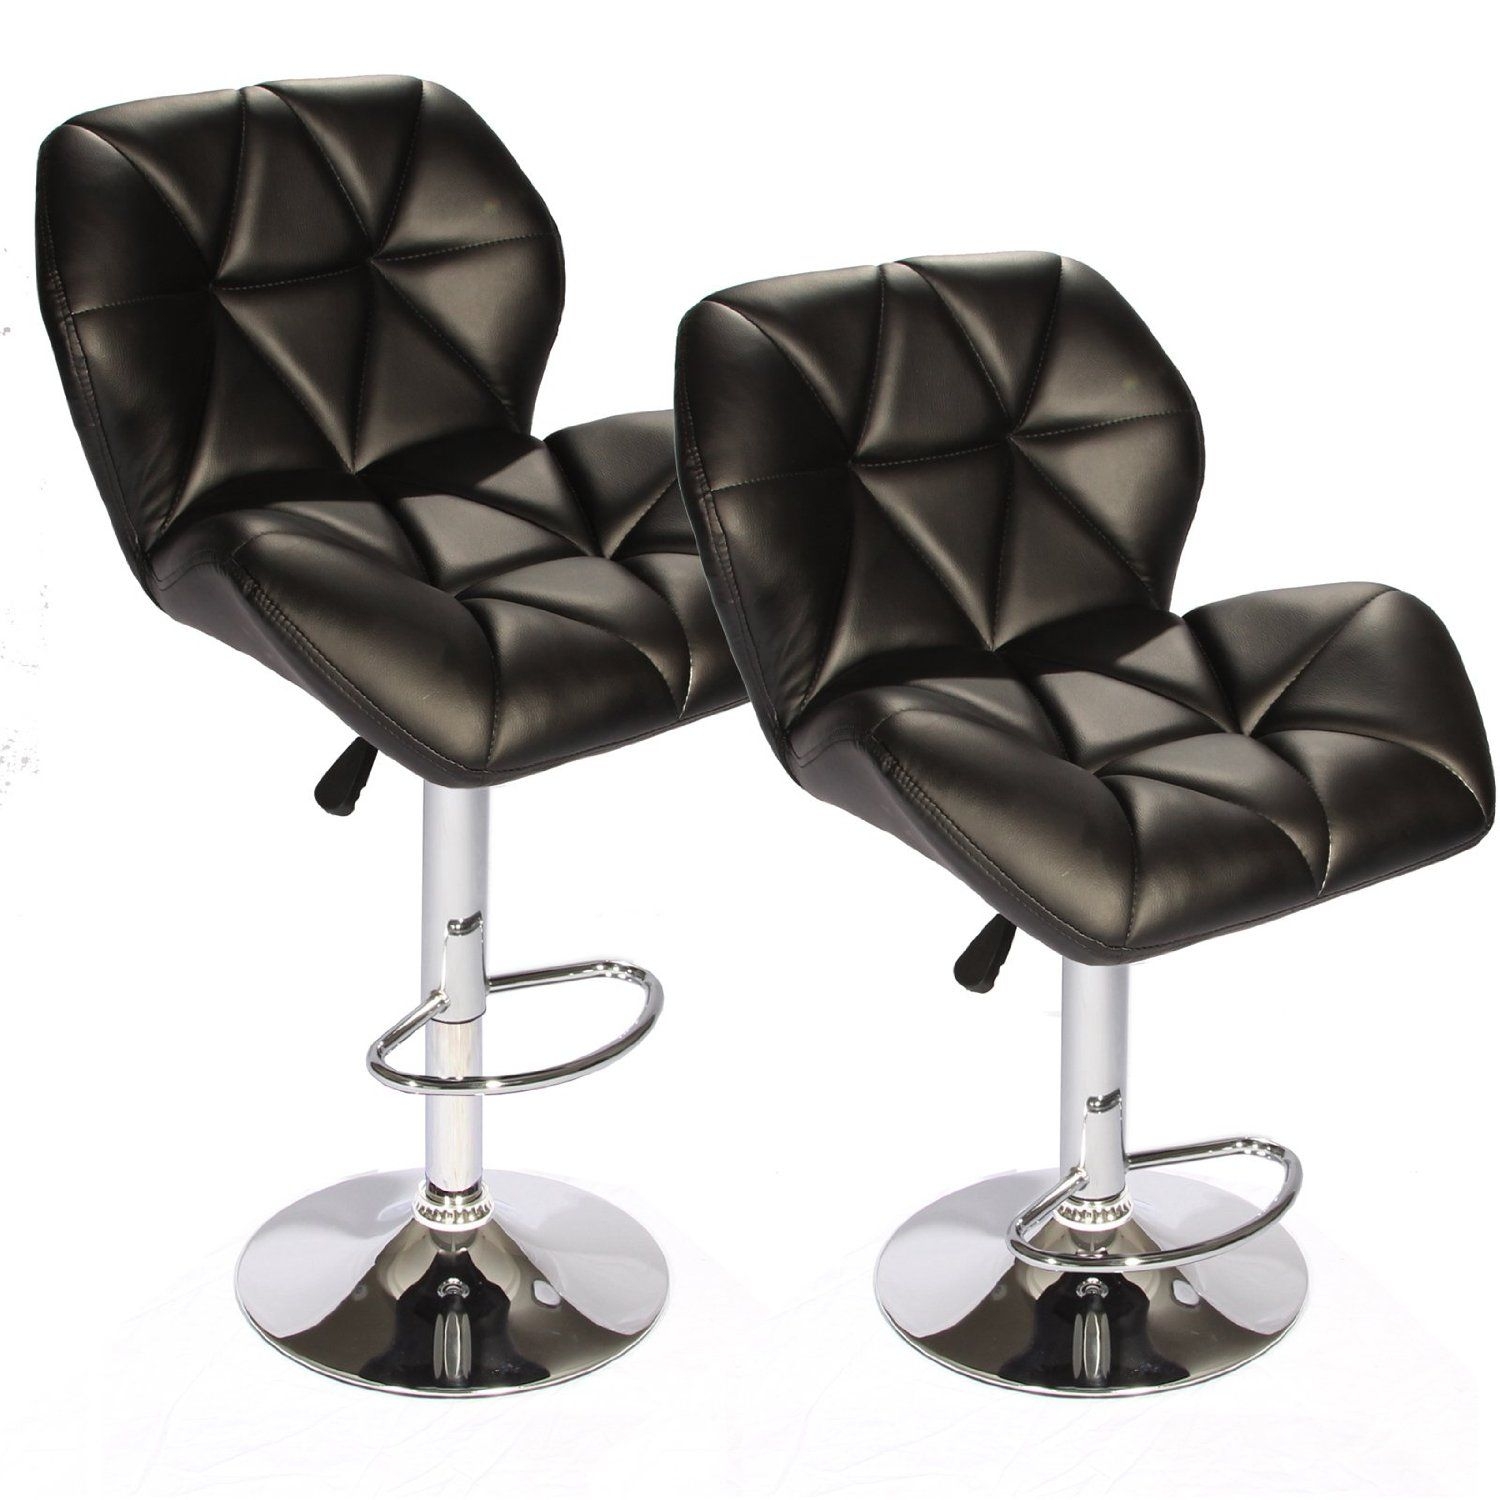 SET of (2) Black Bar Stools Leather Modern Hydraulic Swivel Dinning Chair BarstoolsB01